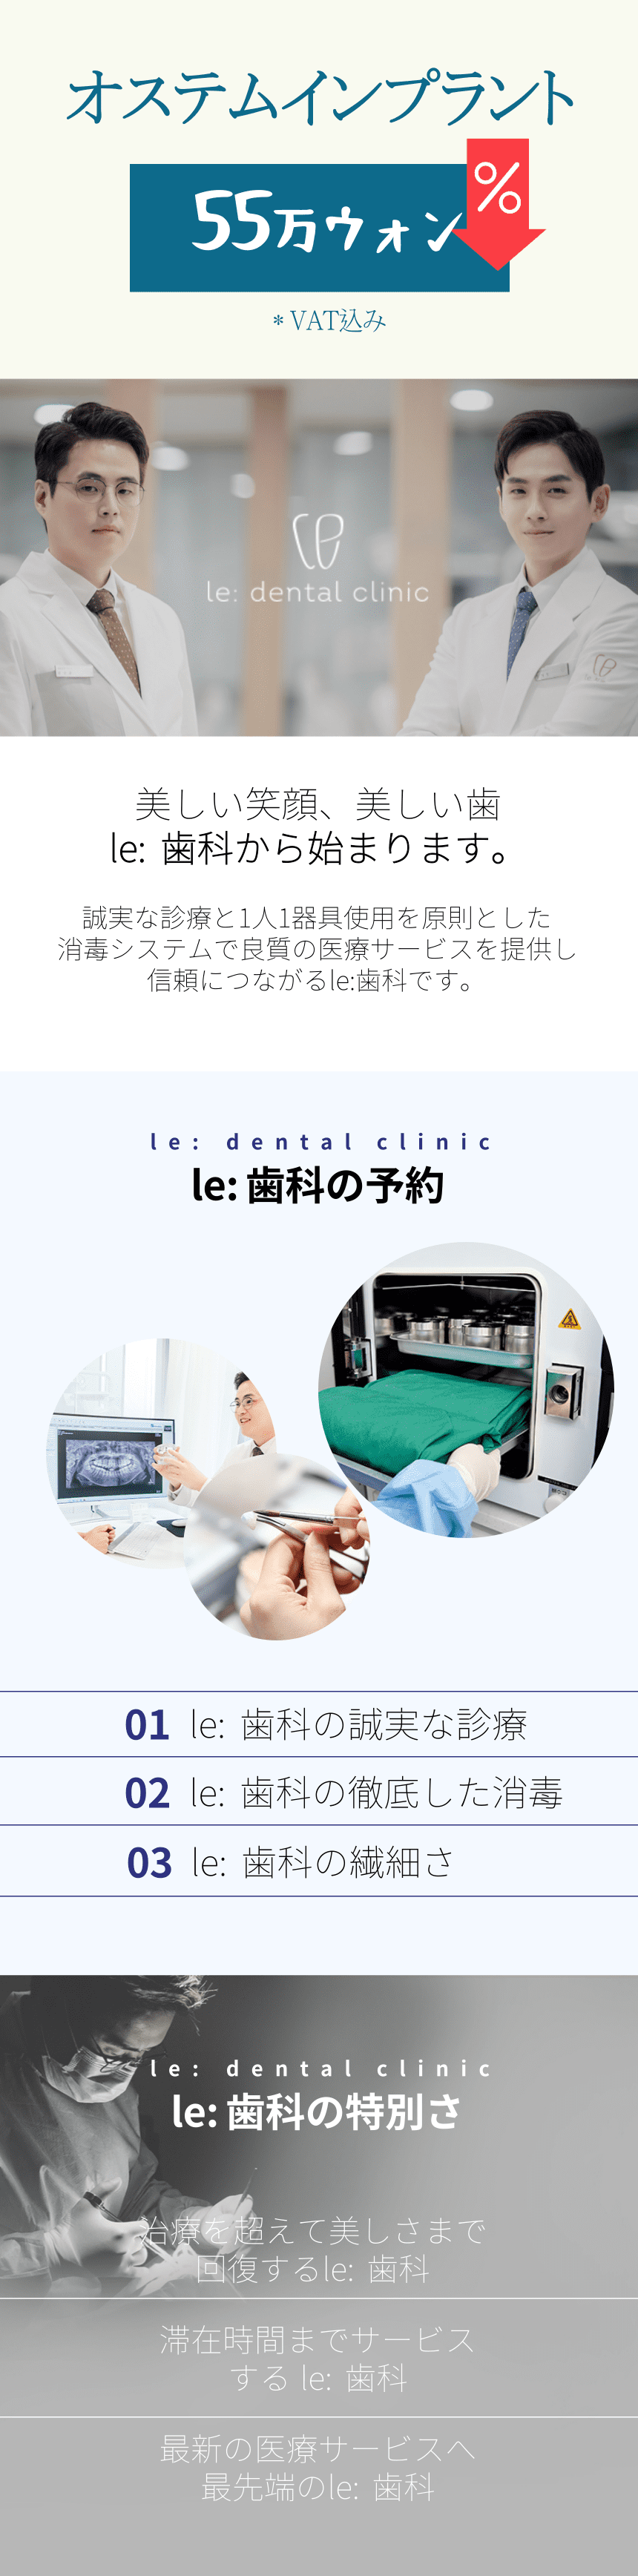 ABKSHOP歯科特別イベント-江南の有名ル歯科でオステムインプラントを割引価格でご提供できるチャンスです。